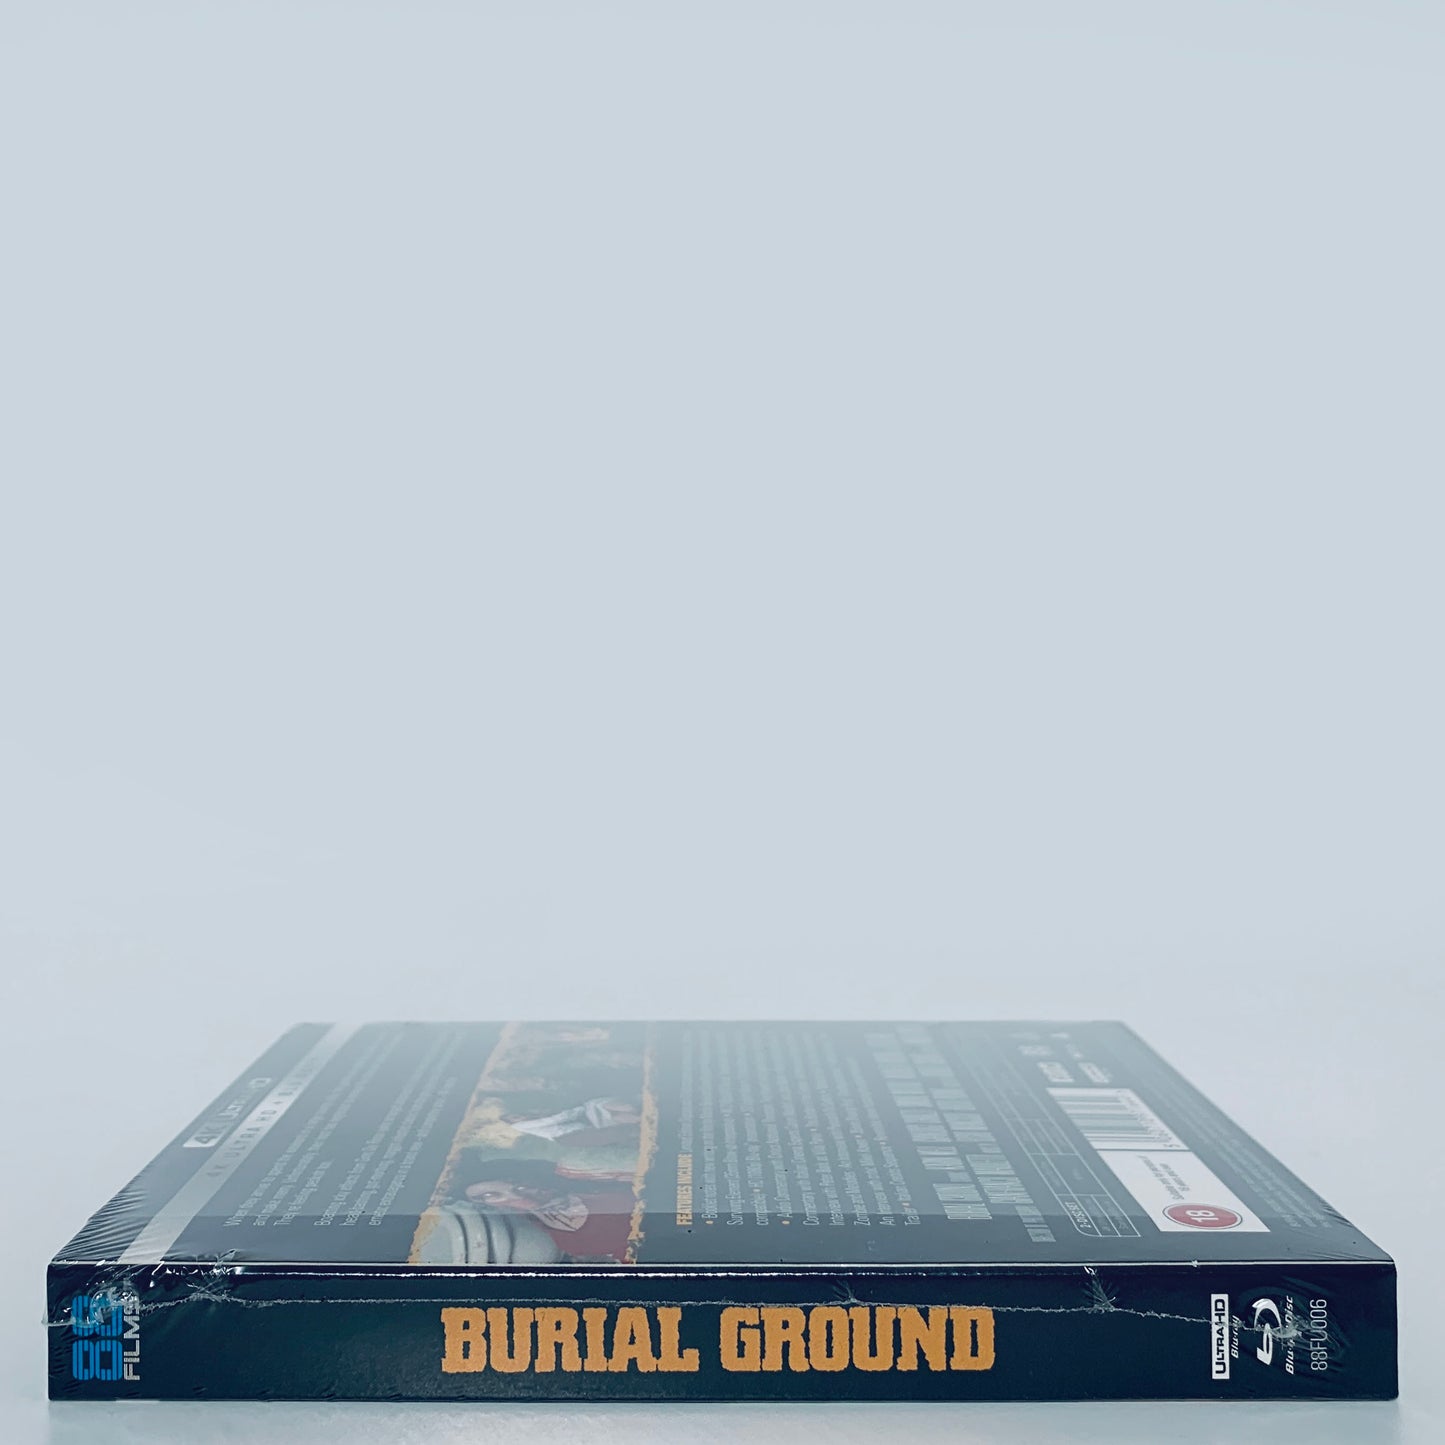 Burial Ground Italian Andrea Bianchi 4K UHD Blu-ray 88 Films UK Ultra HD Nights of Terror Zombie Dead